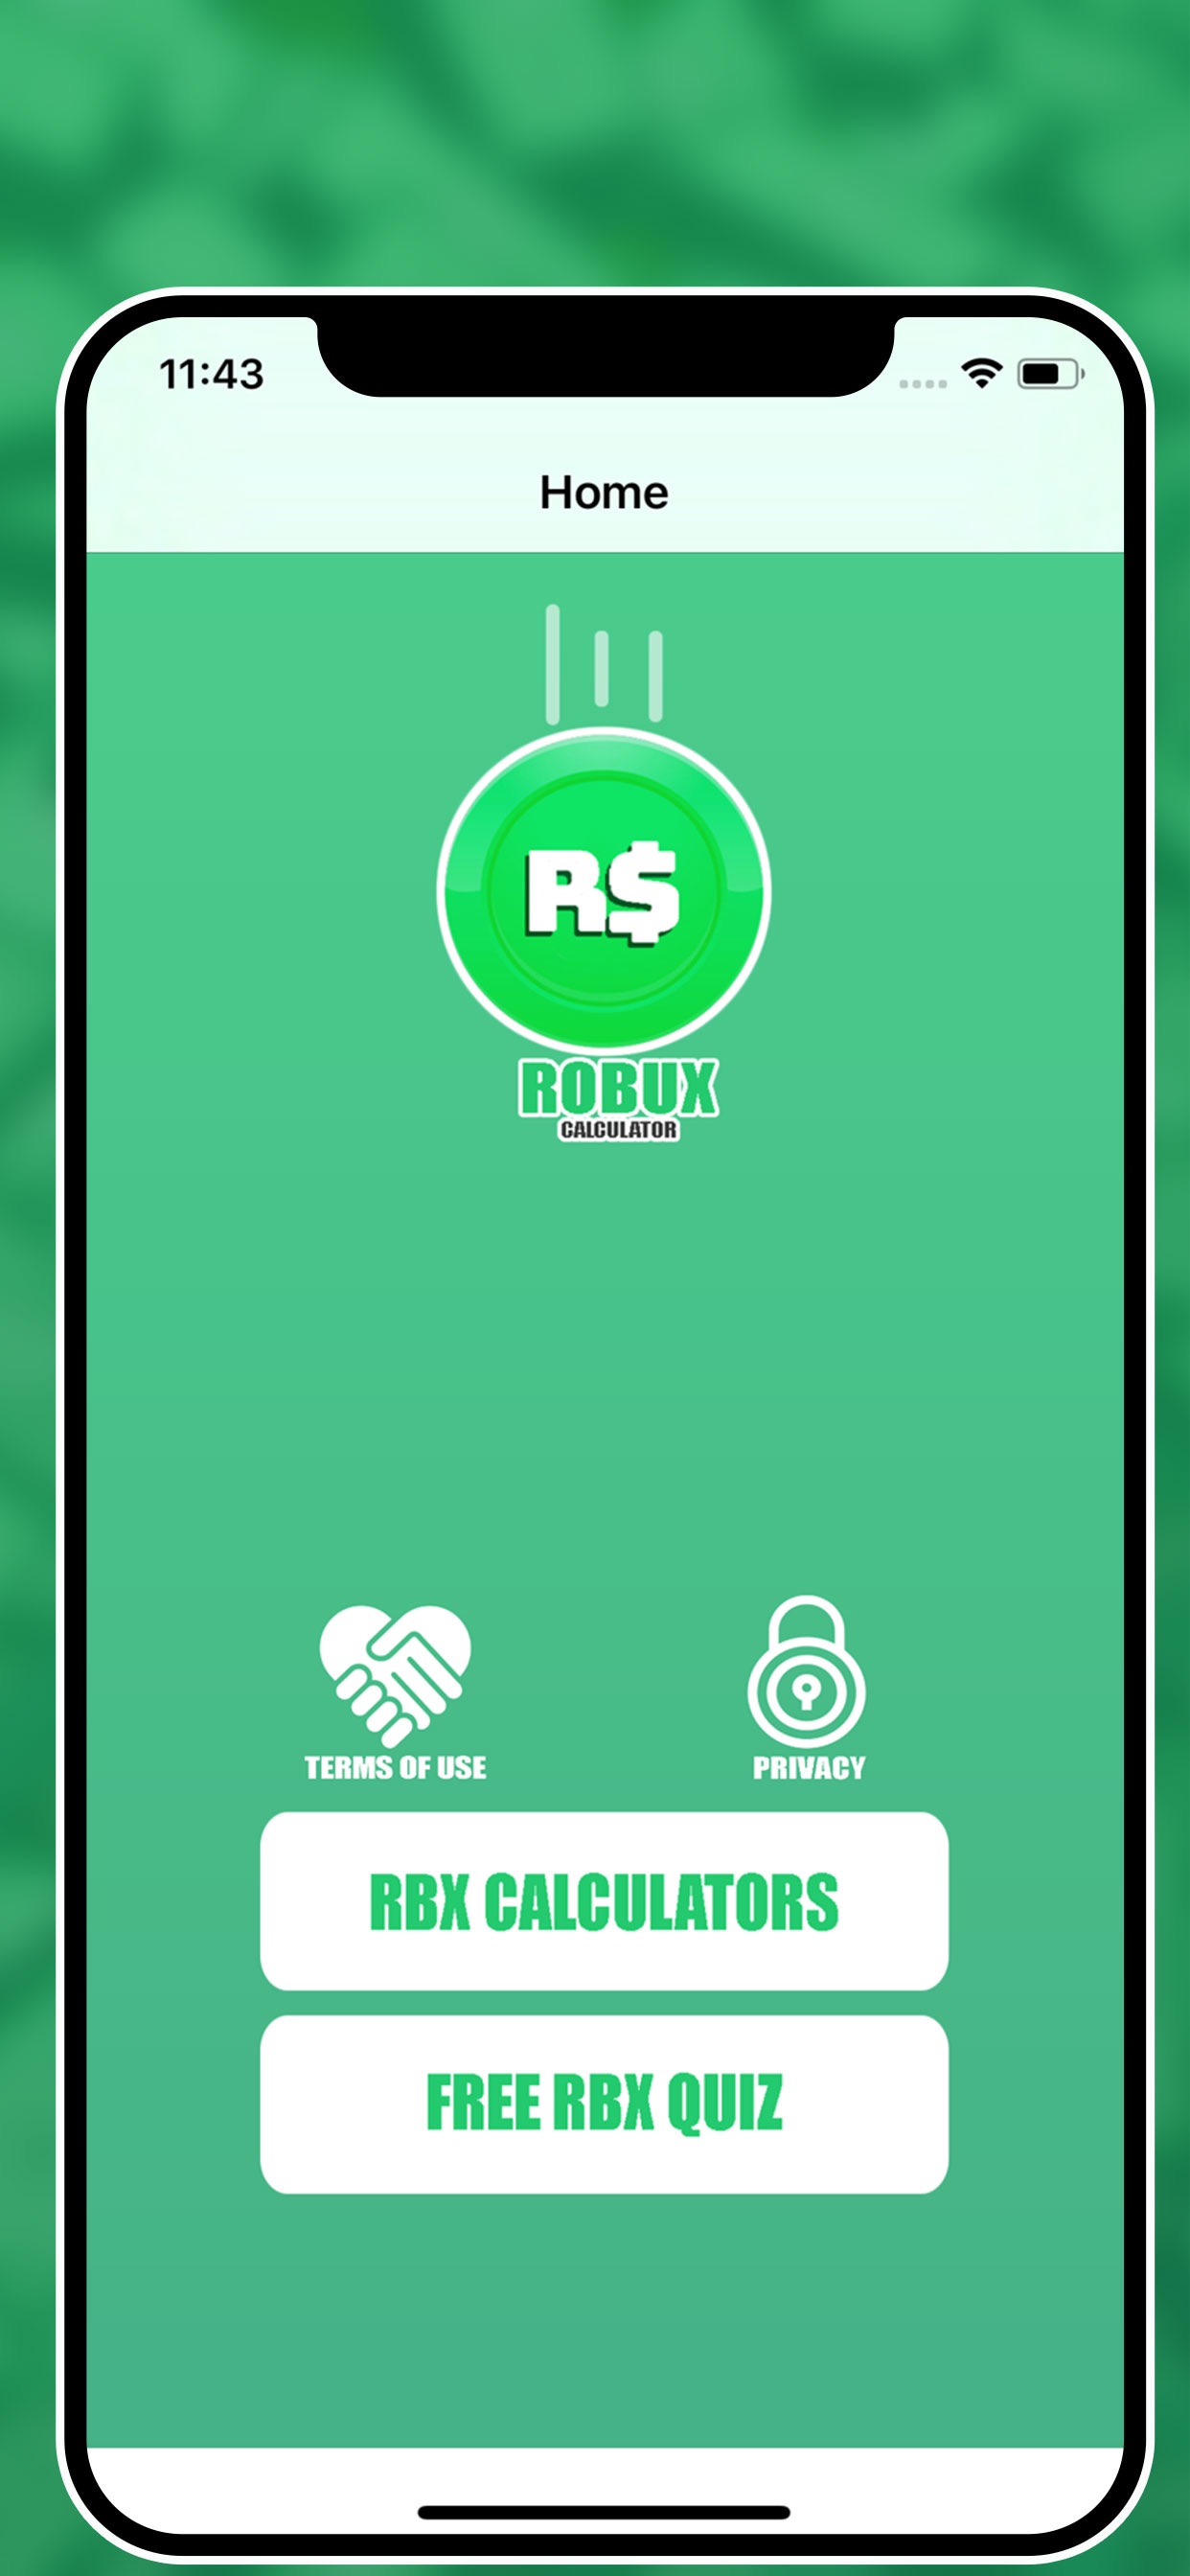 Robux Calculator For Rblox App Store Review Aso Revenue Downloads Appfollow - roblox revenue calculator